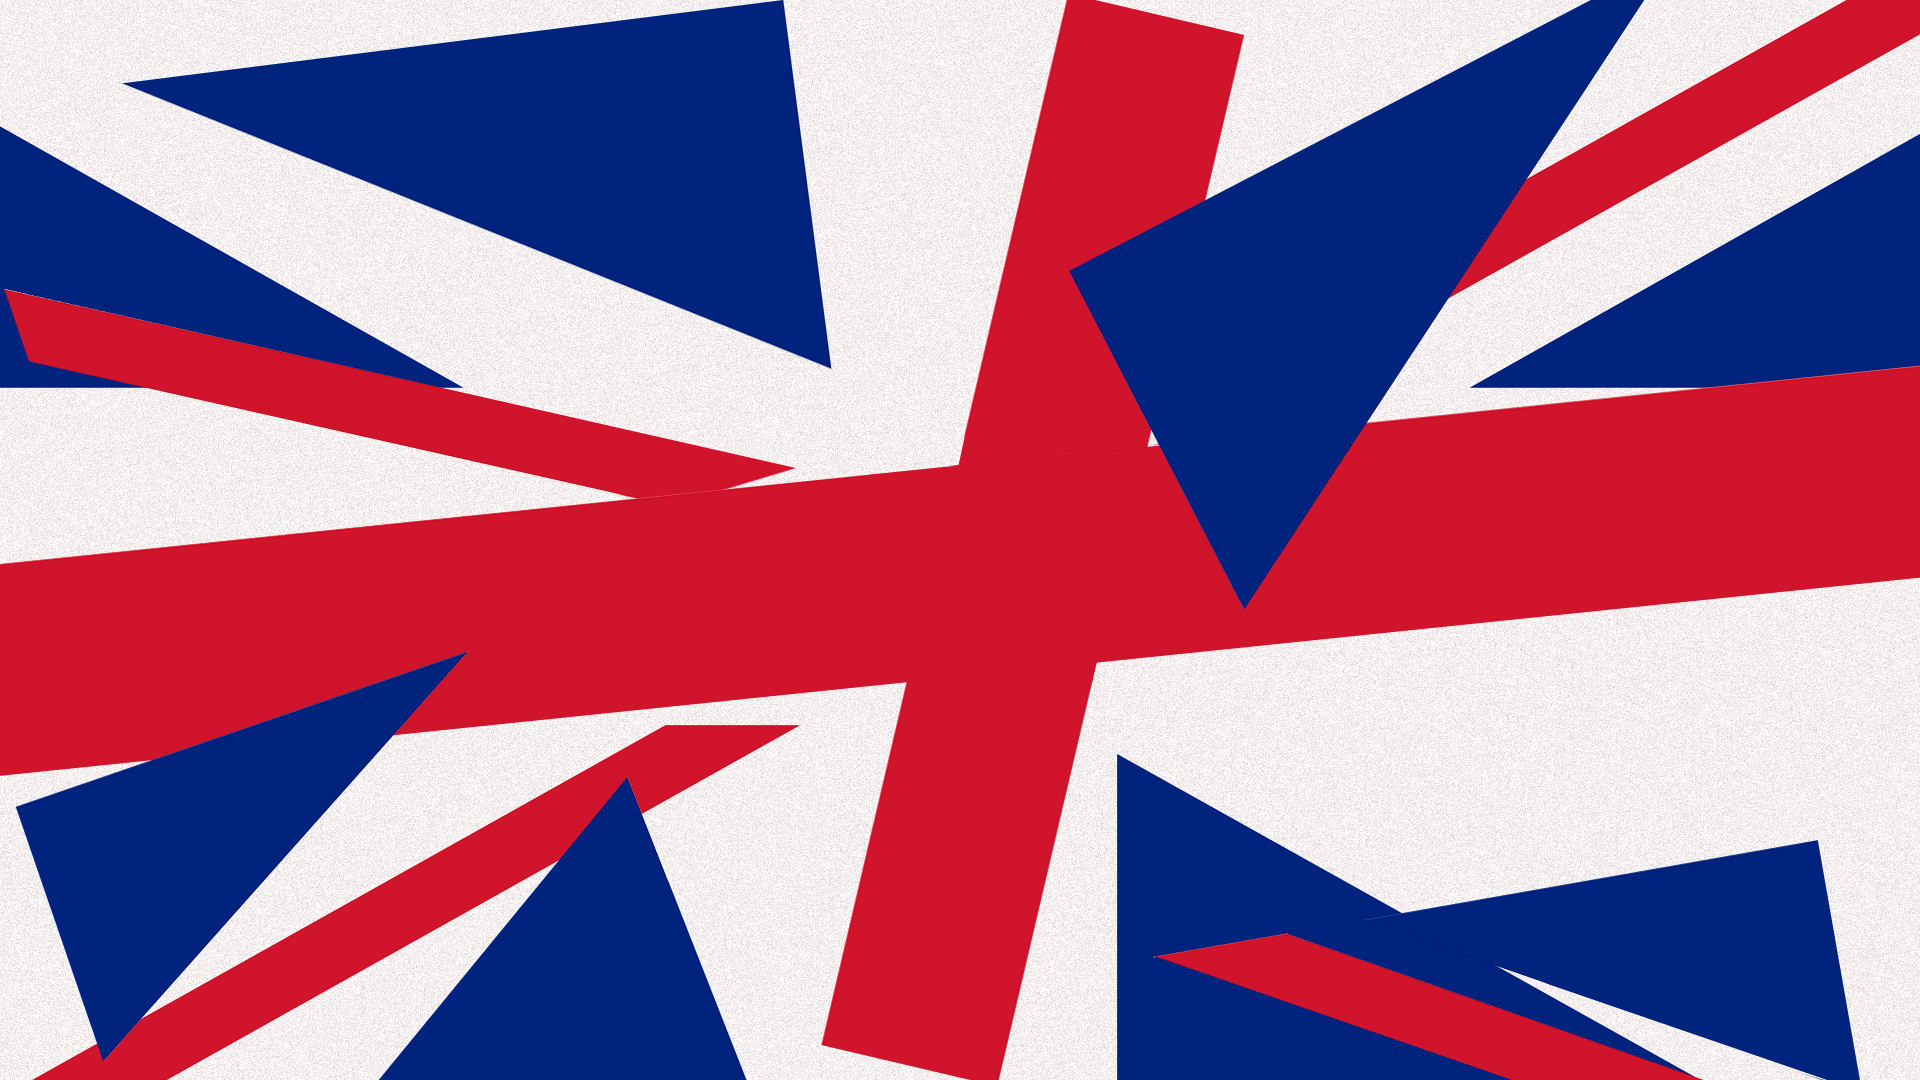 Fractured British flag